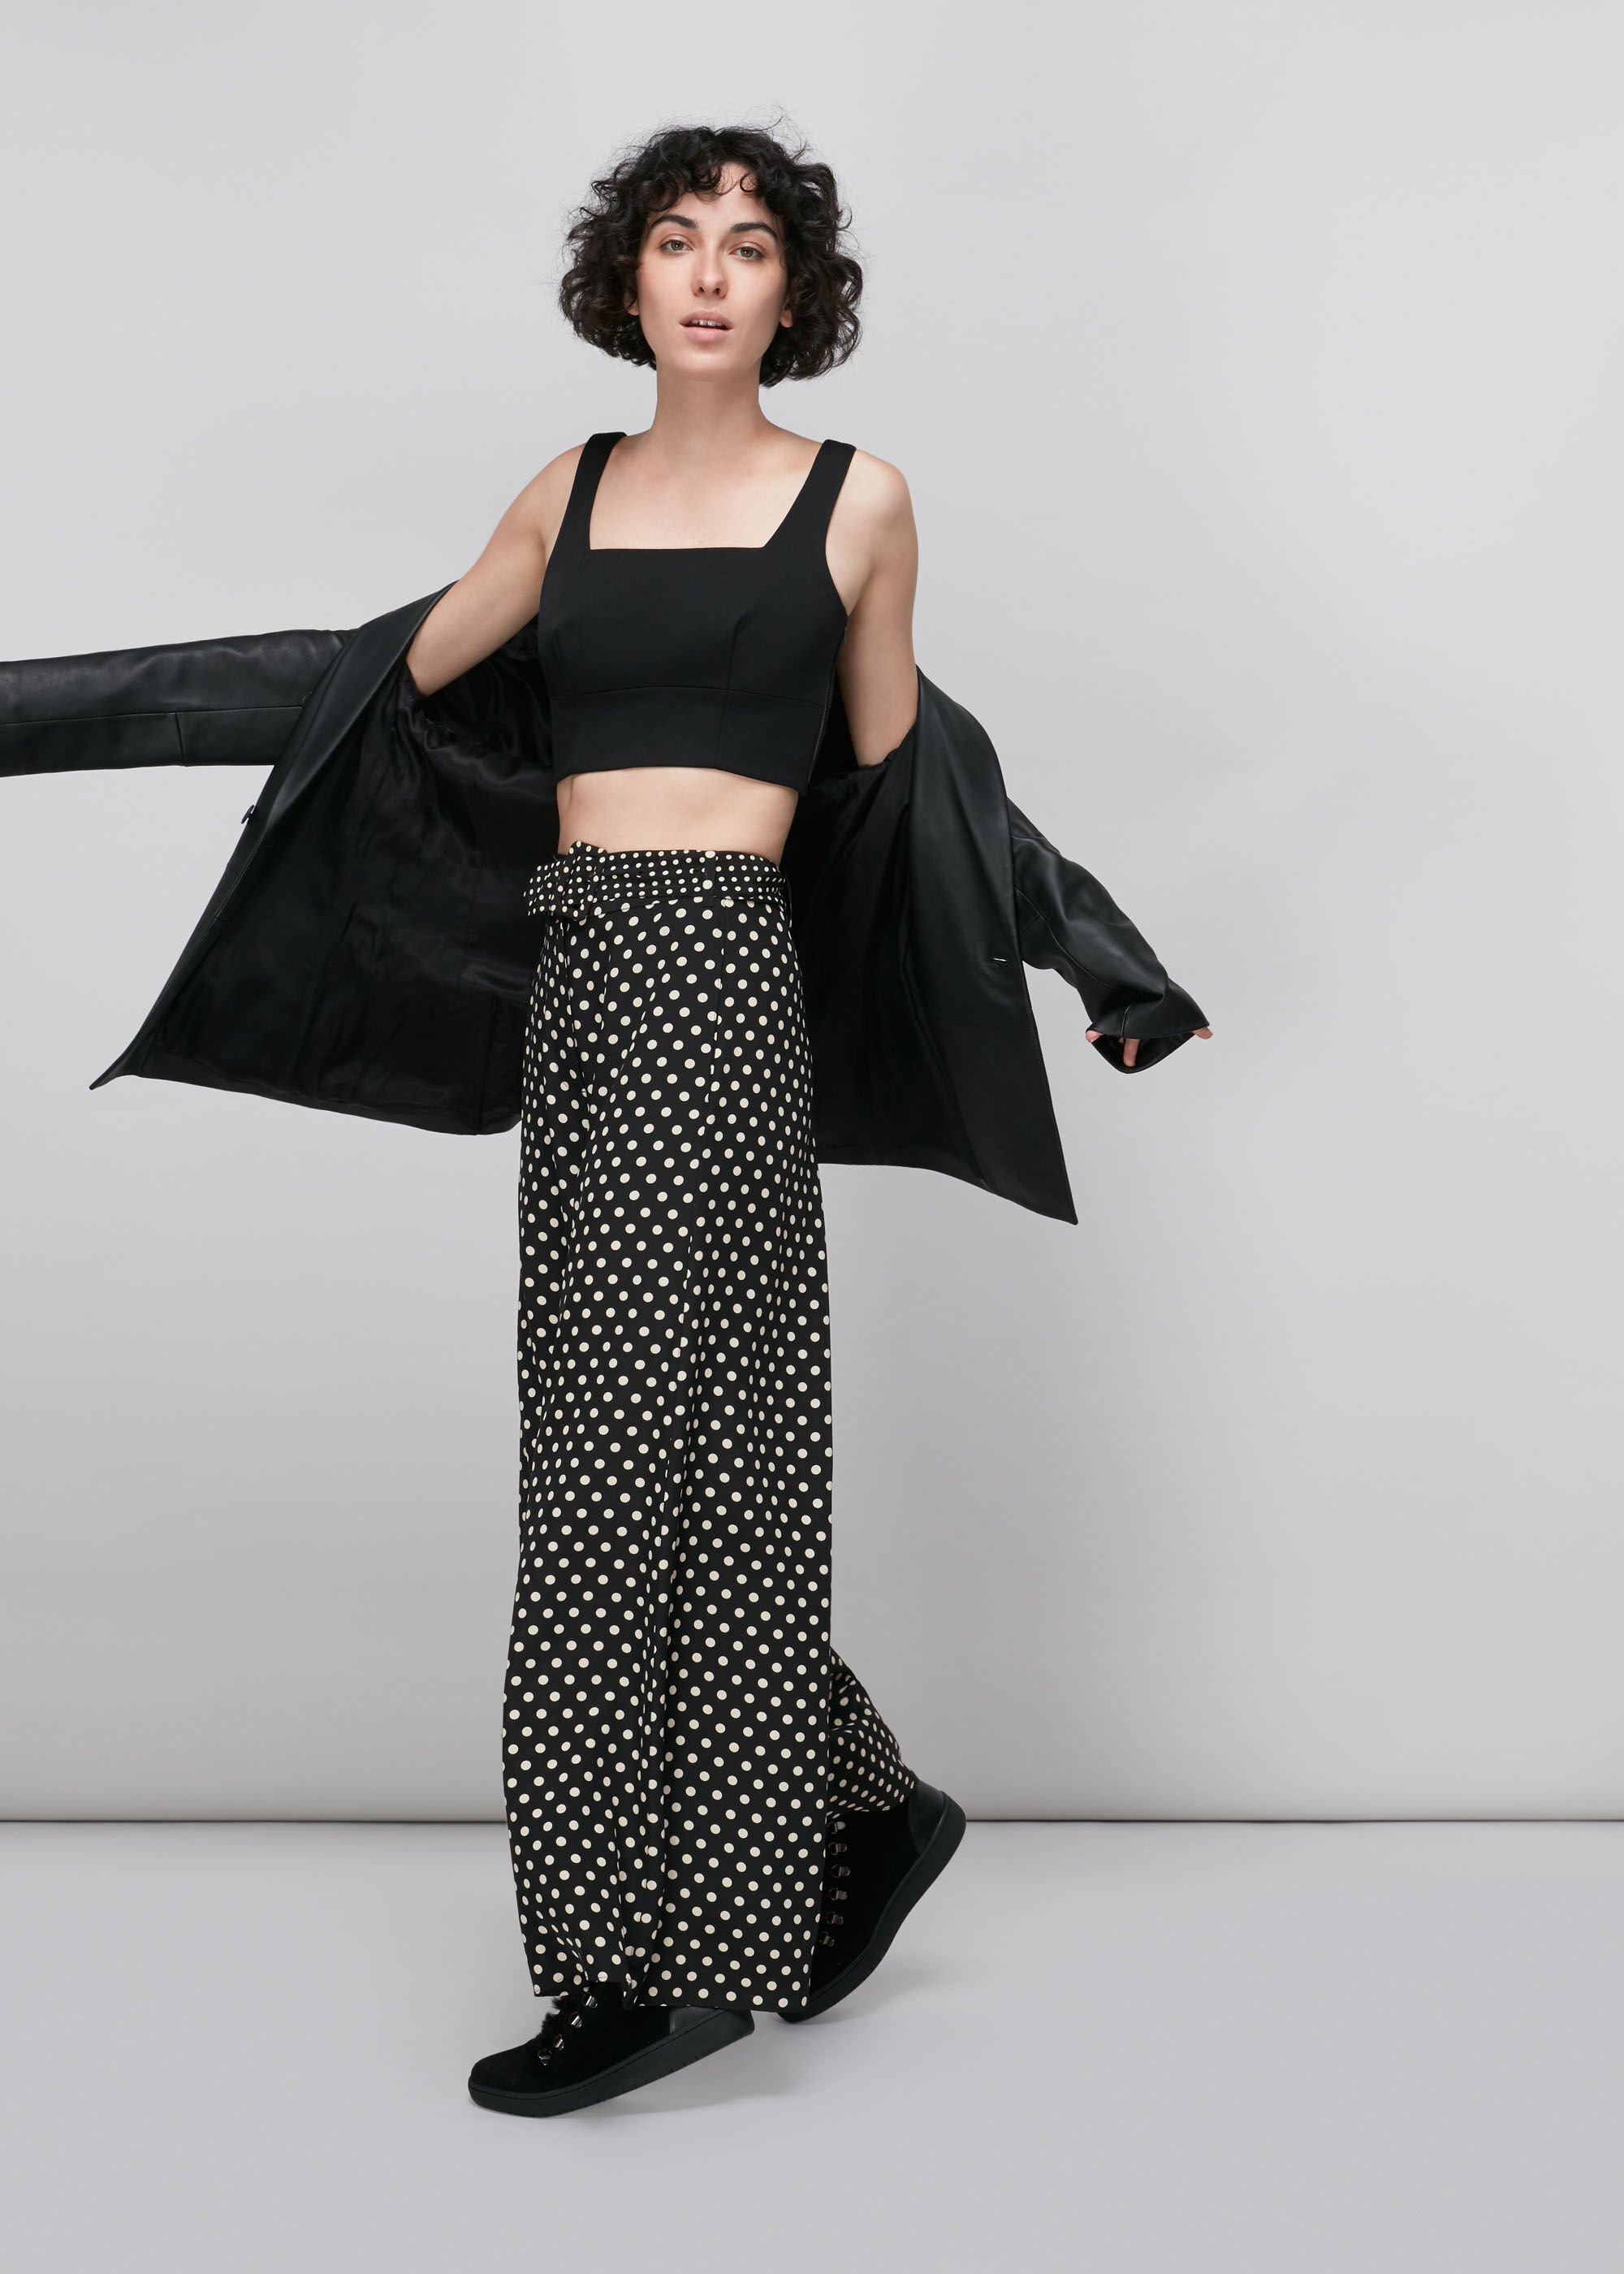 Buy Taffeta Silk Black Palazzo Pant Suit With Zari Work Online - LSTV01039  | Andaaz Fashion Eid Store